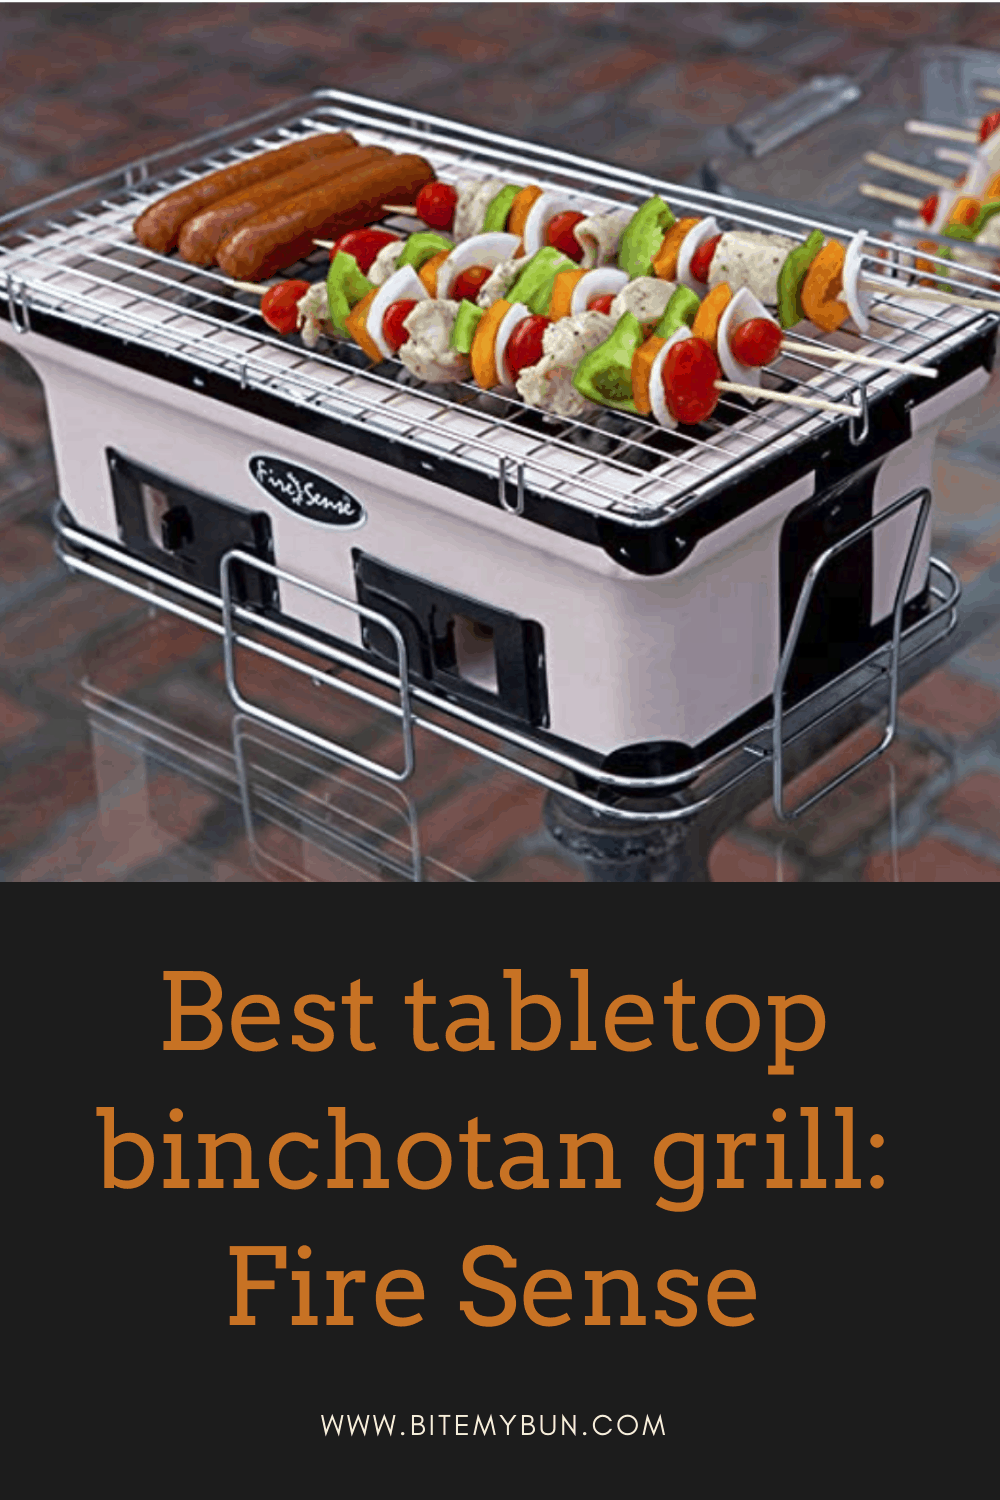 TableTop binchotan grill